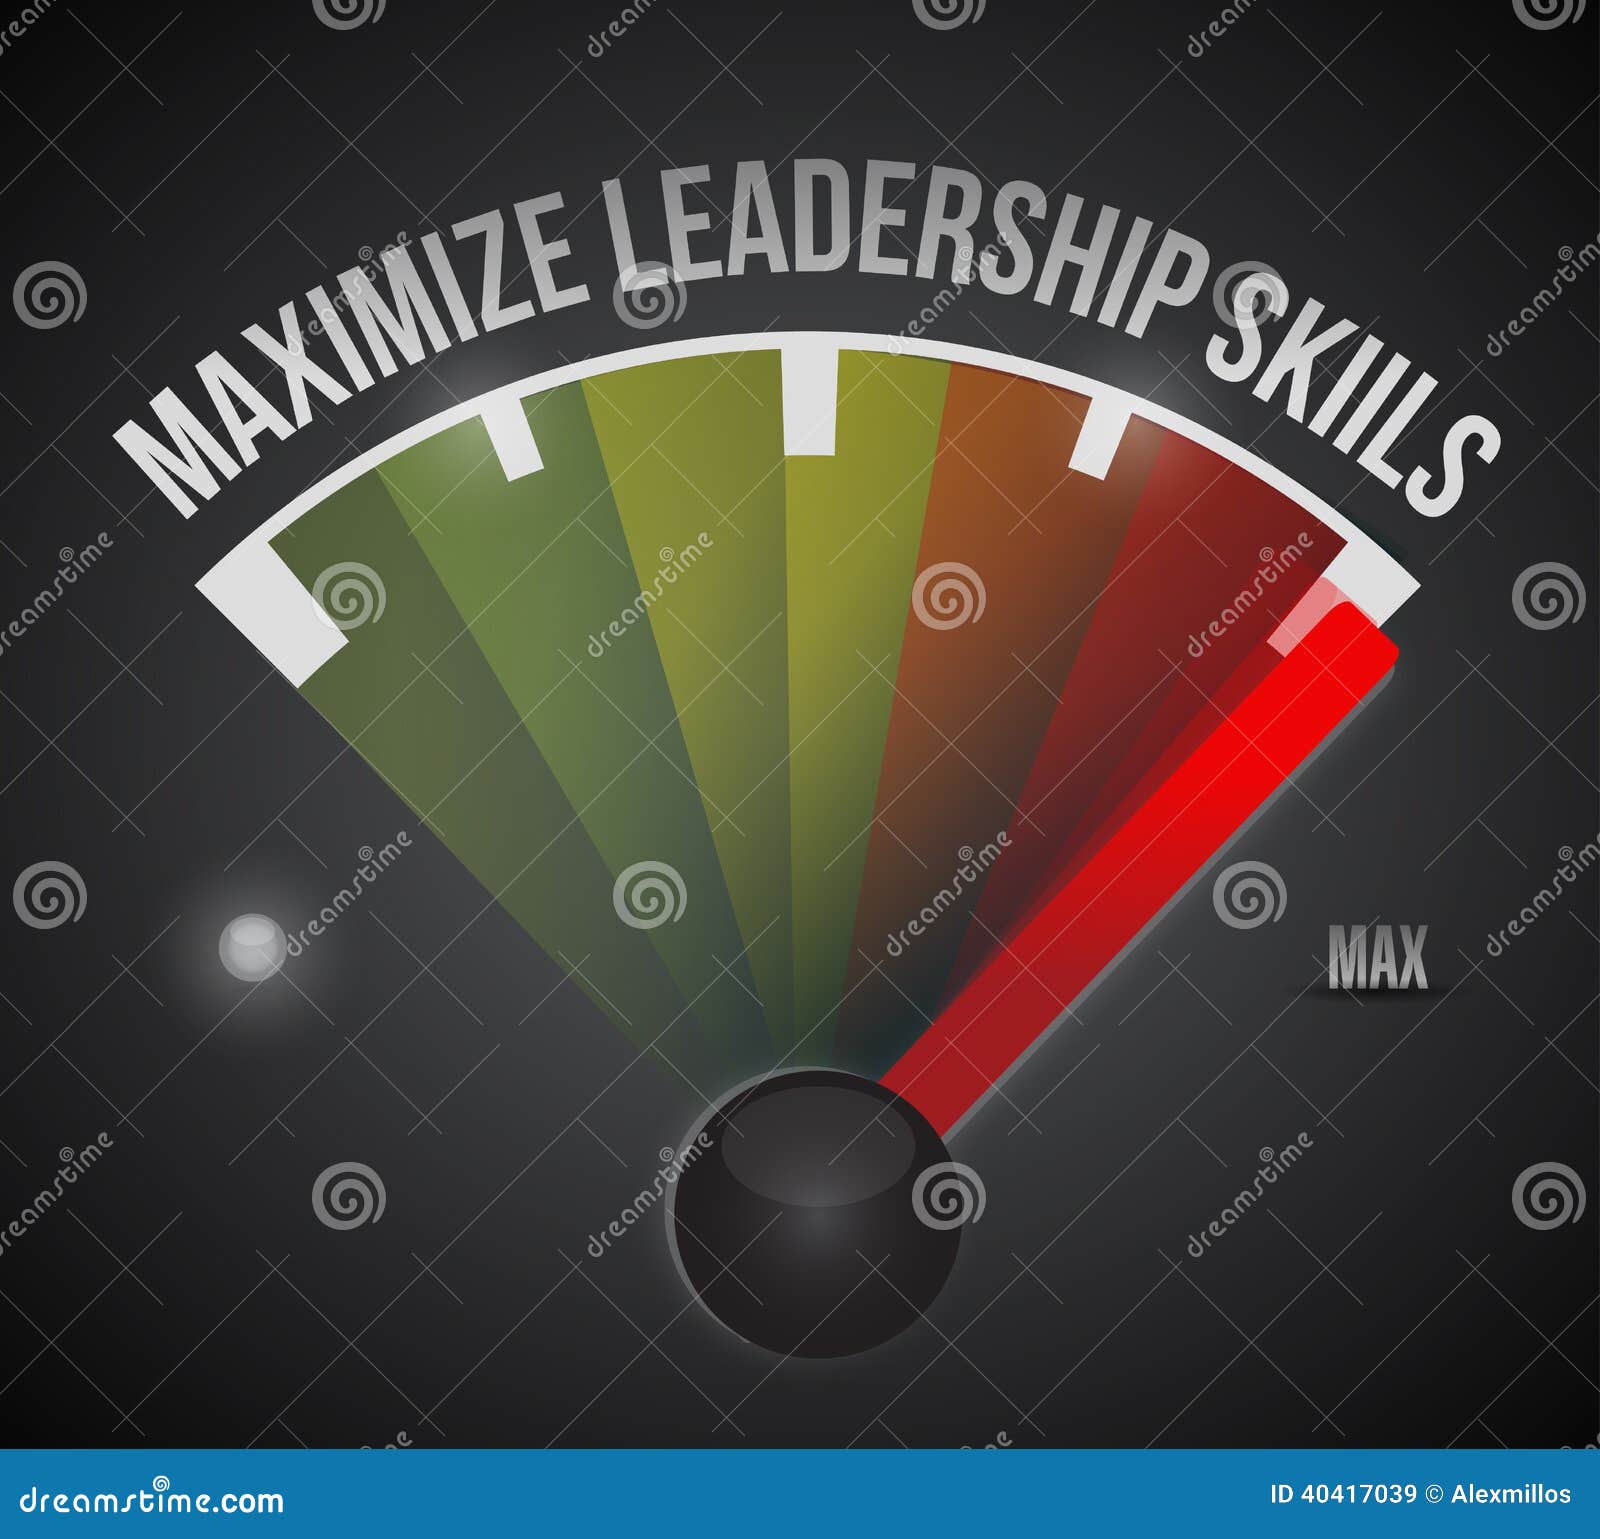 maximize leadership skills to the max 